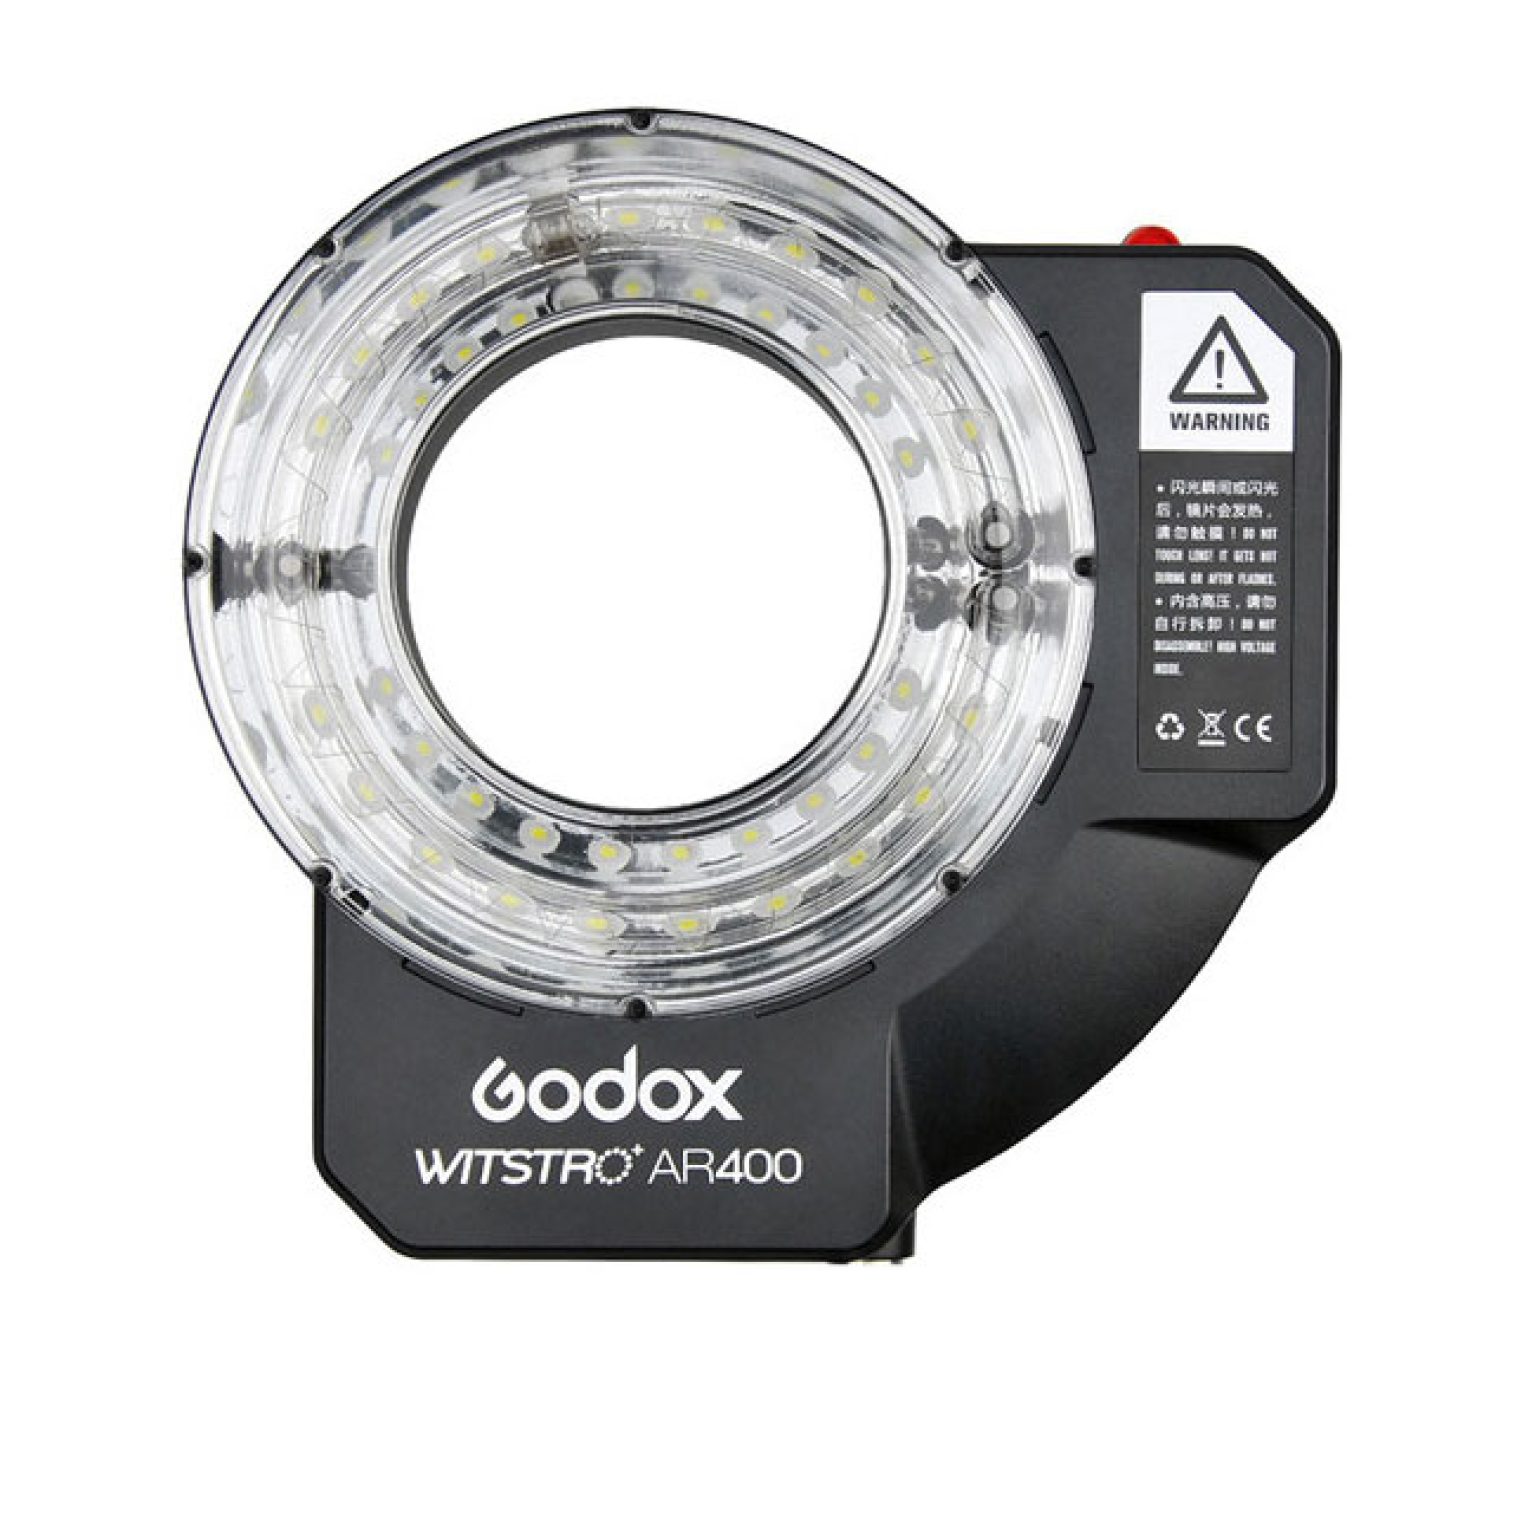 Godox Witstro Ring Flash AR4006